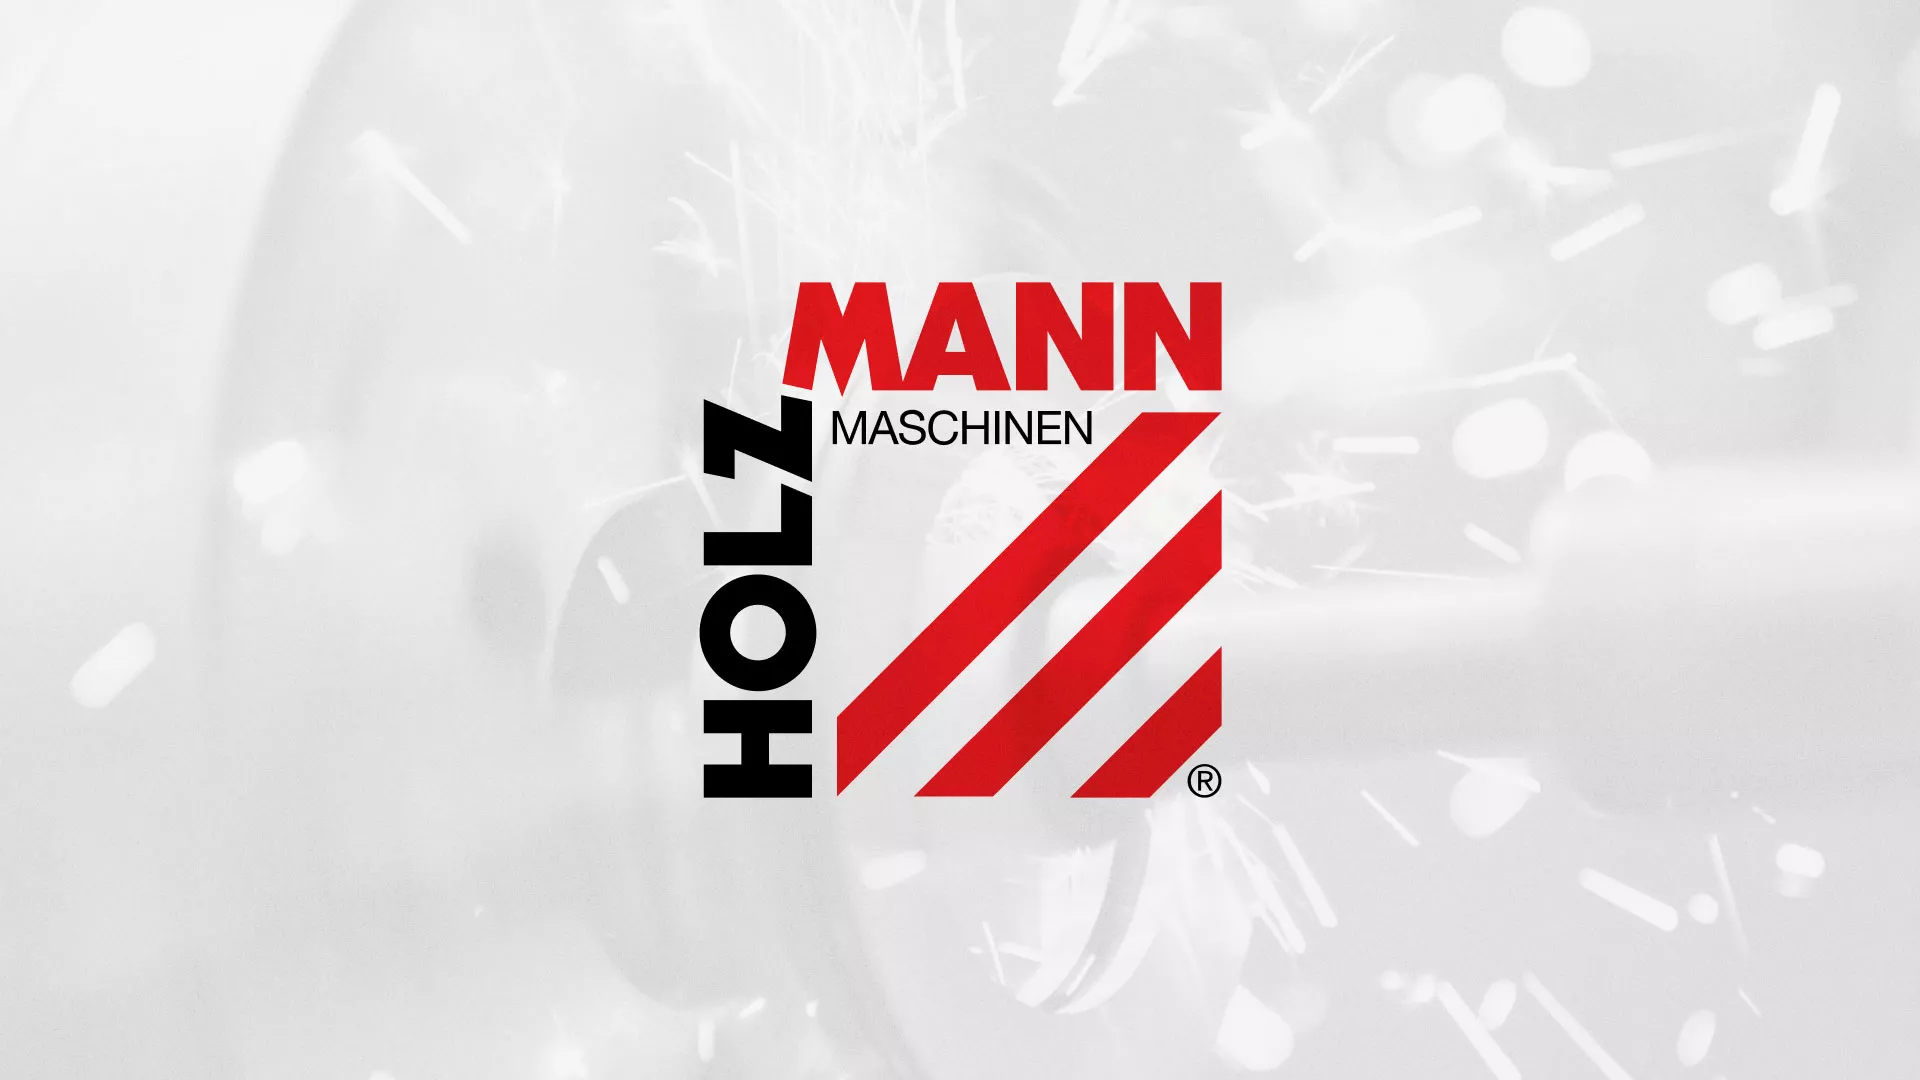 Создание сайта компании «HOLZMANN Maschinen GmbH» в Карабаново